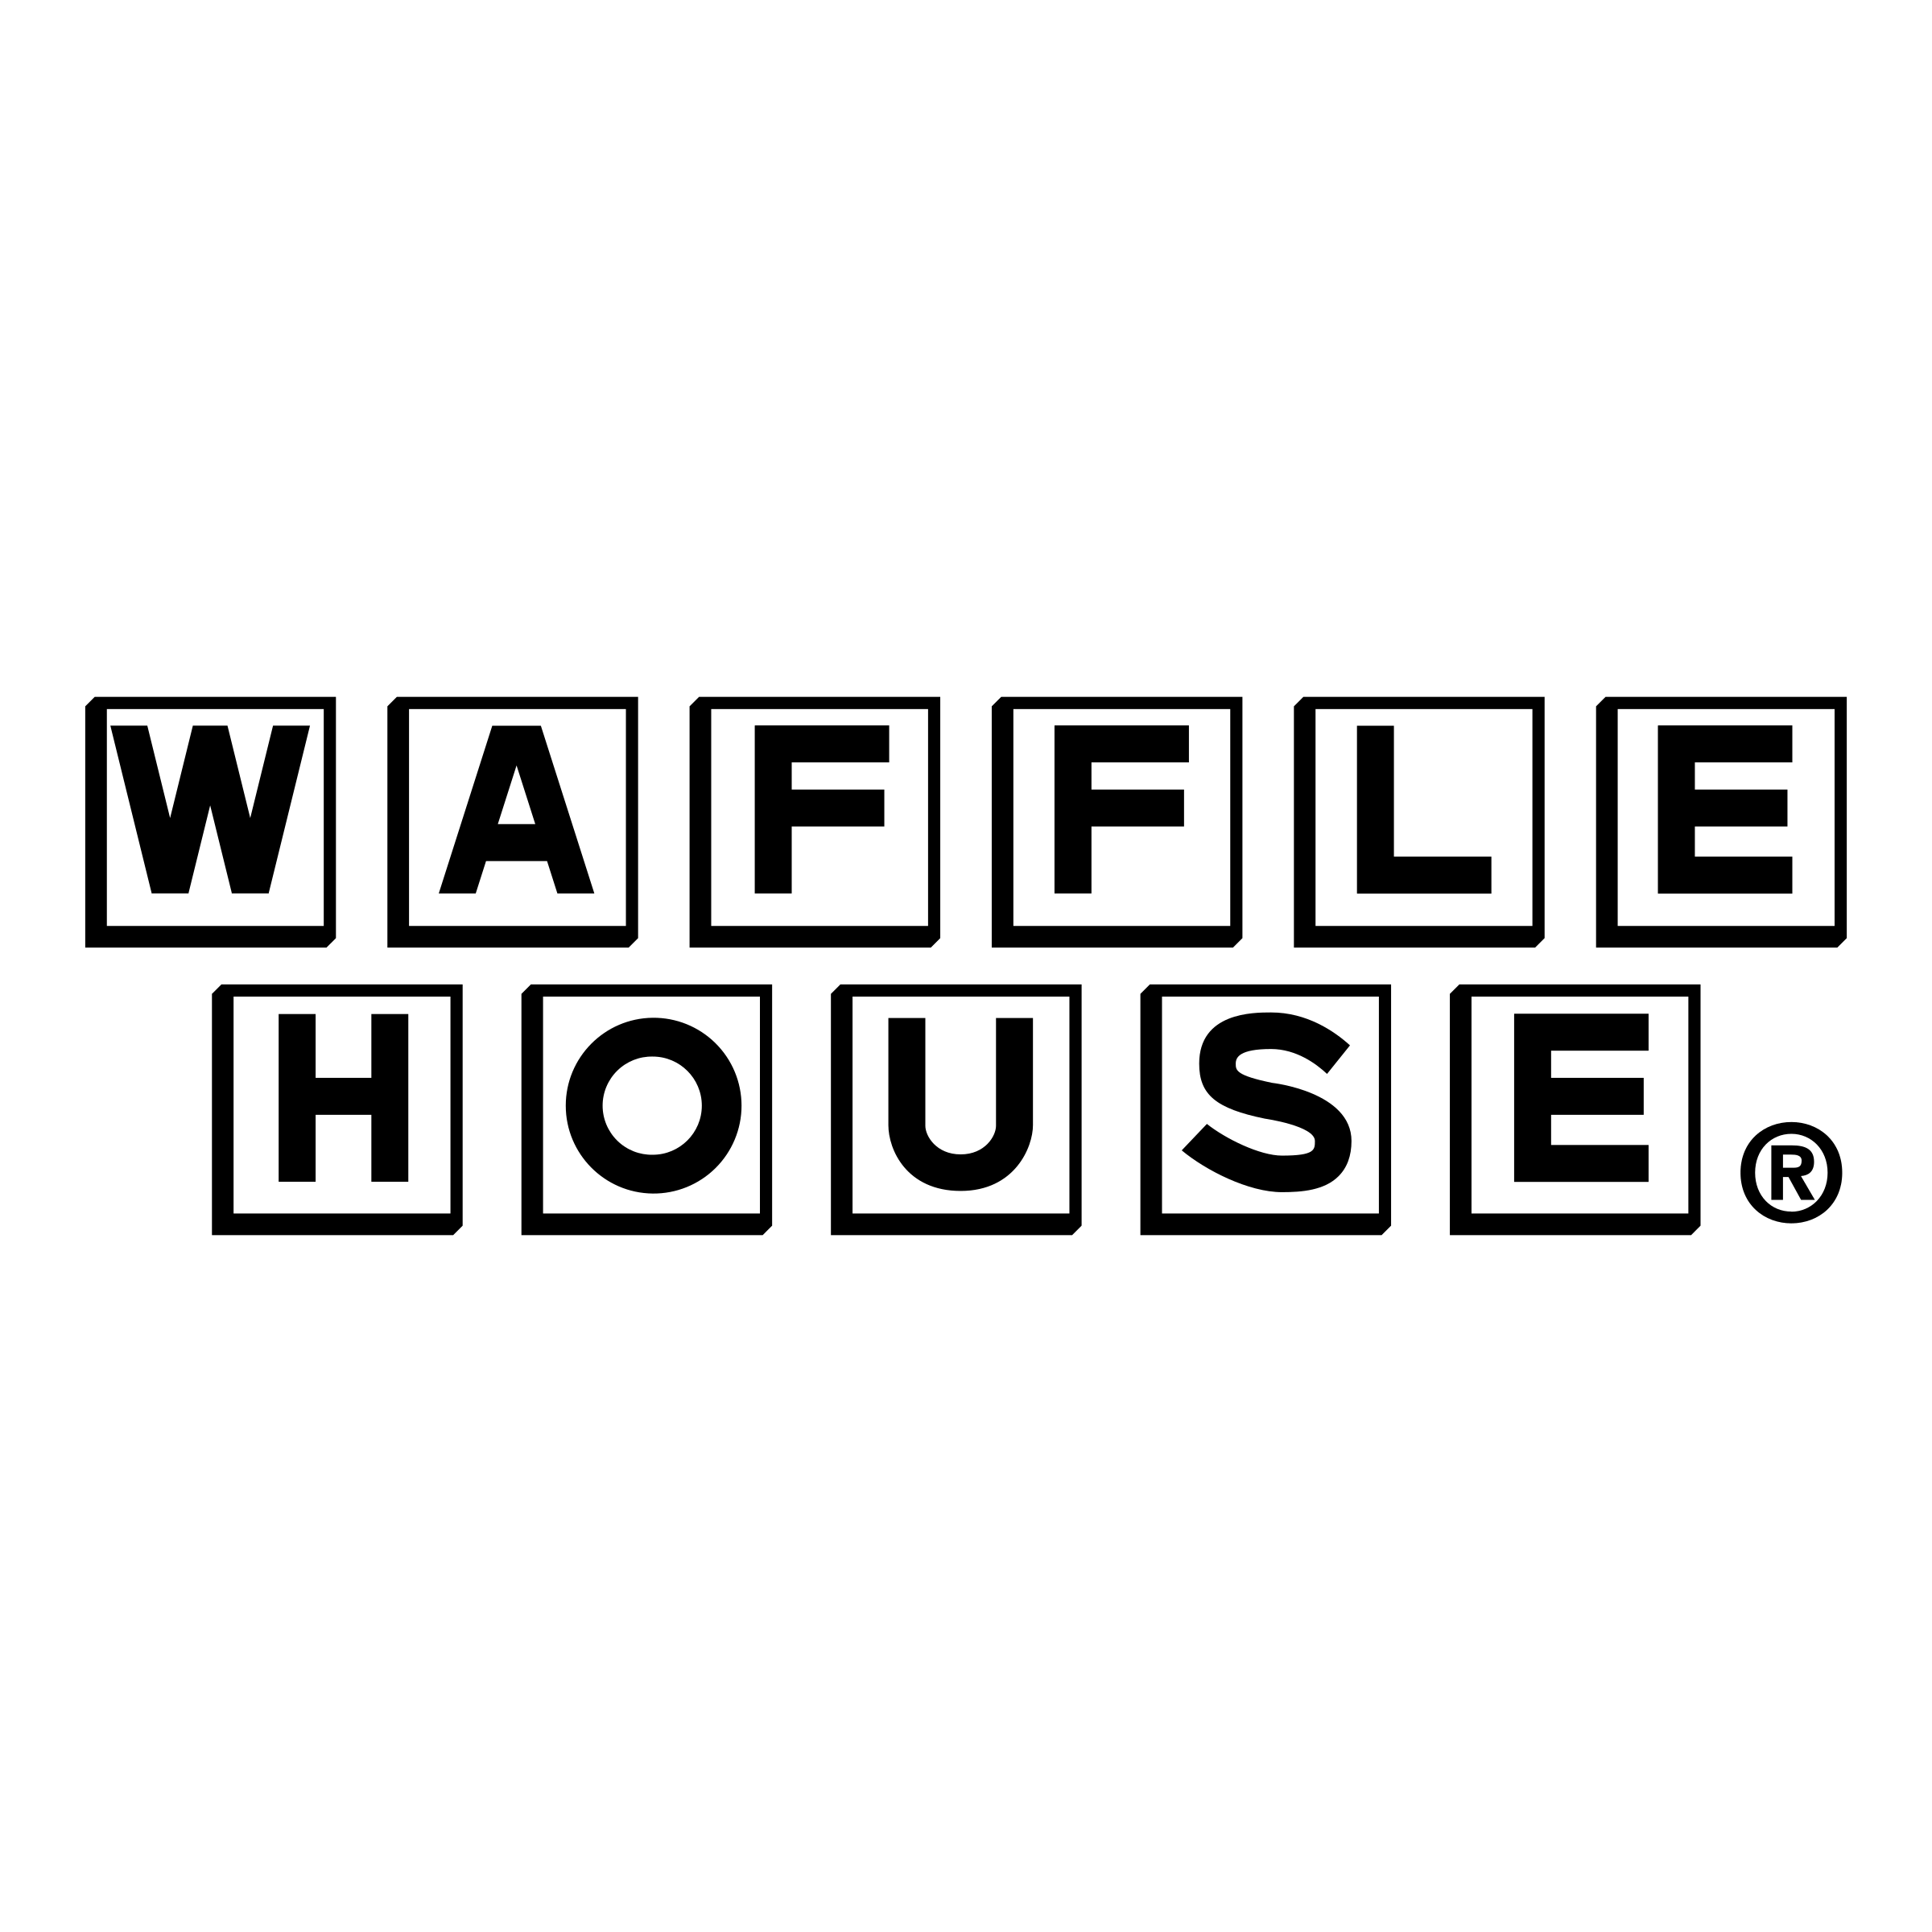 Waffle House Logo - Waffle House Logo PNG Transparent & SVG Vector